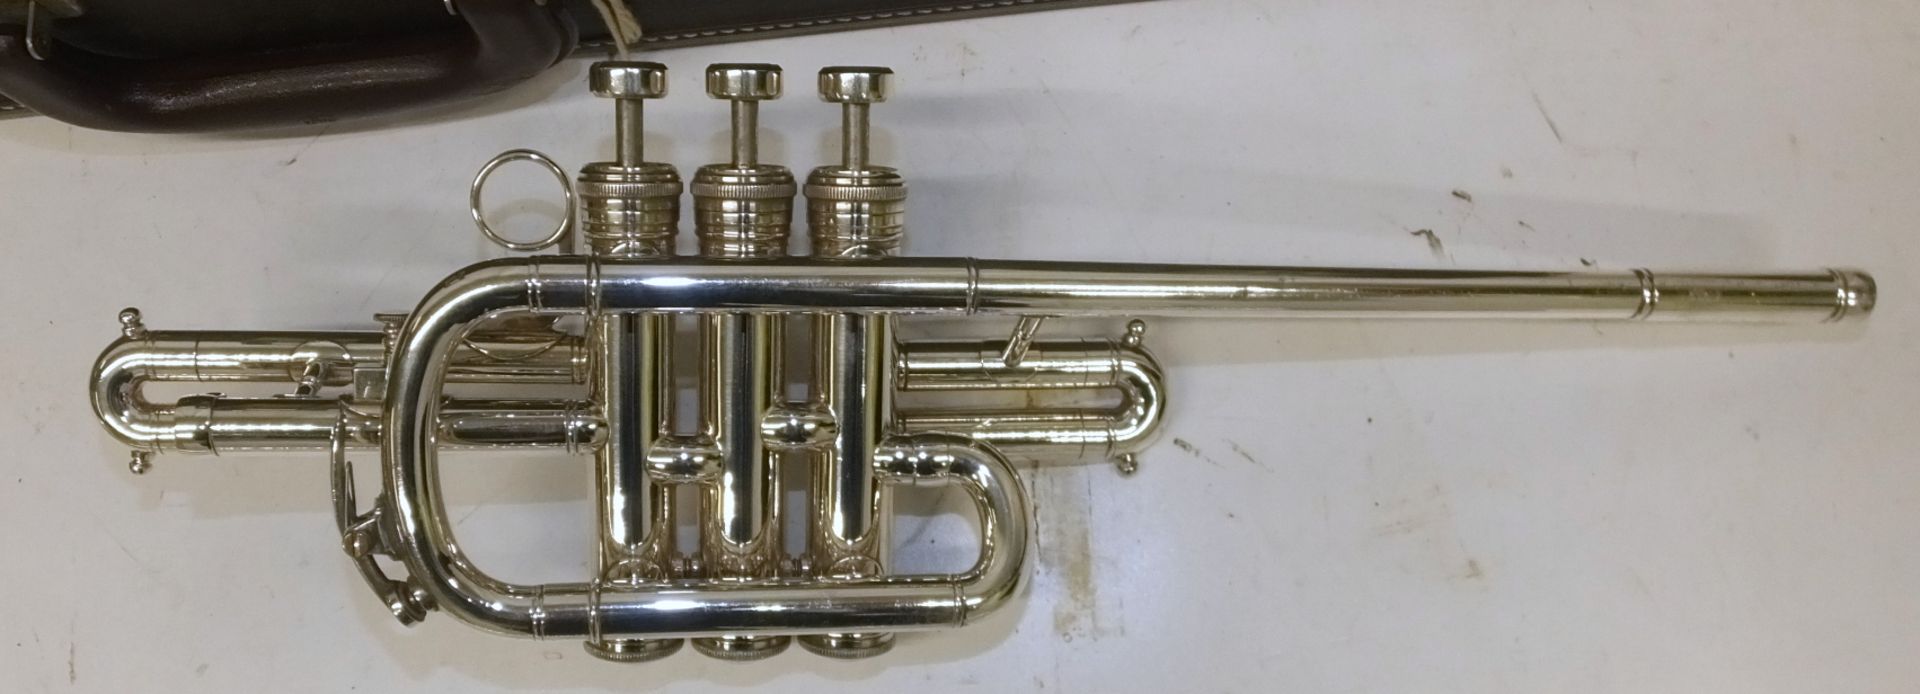 Besson International Fanfare Trumpet in case - Serial Number - 706 - 719532 - Image 3 of 8